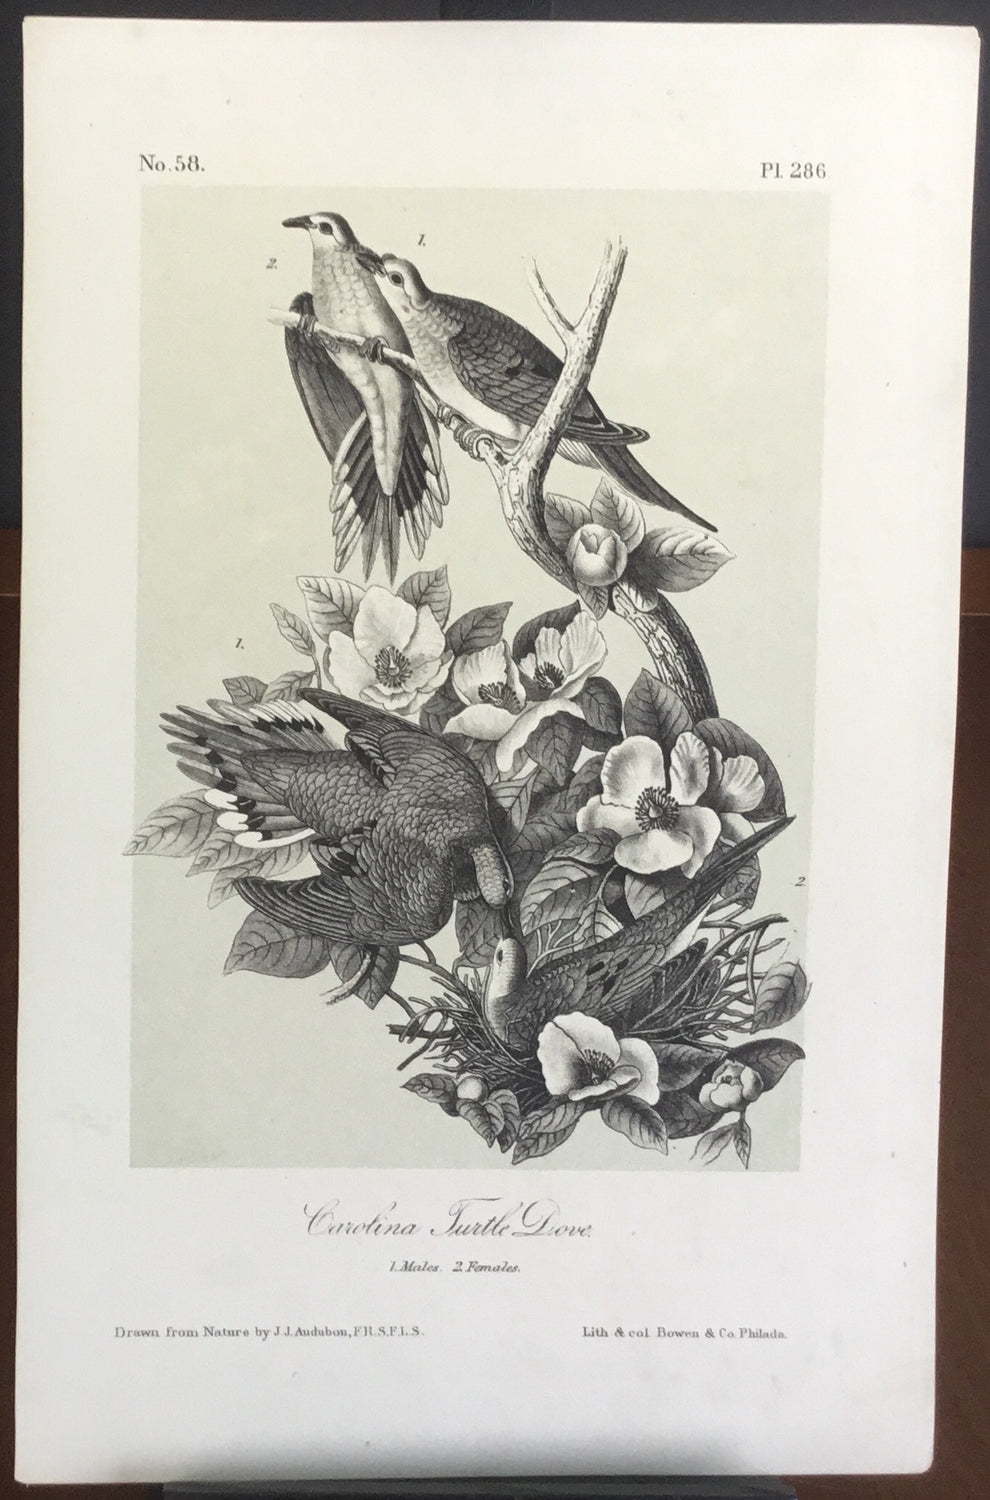 Audubon Octavo Carolina Turtle Dove (2), plate 286, uncolored test sheet, 7 x 11